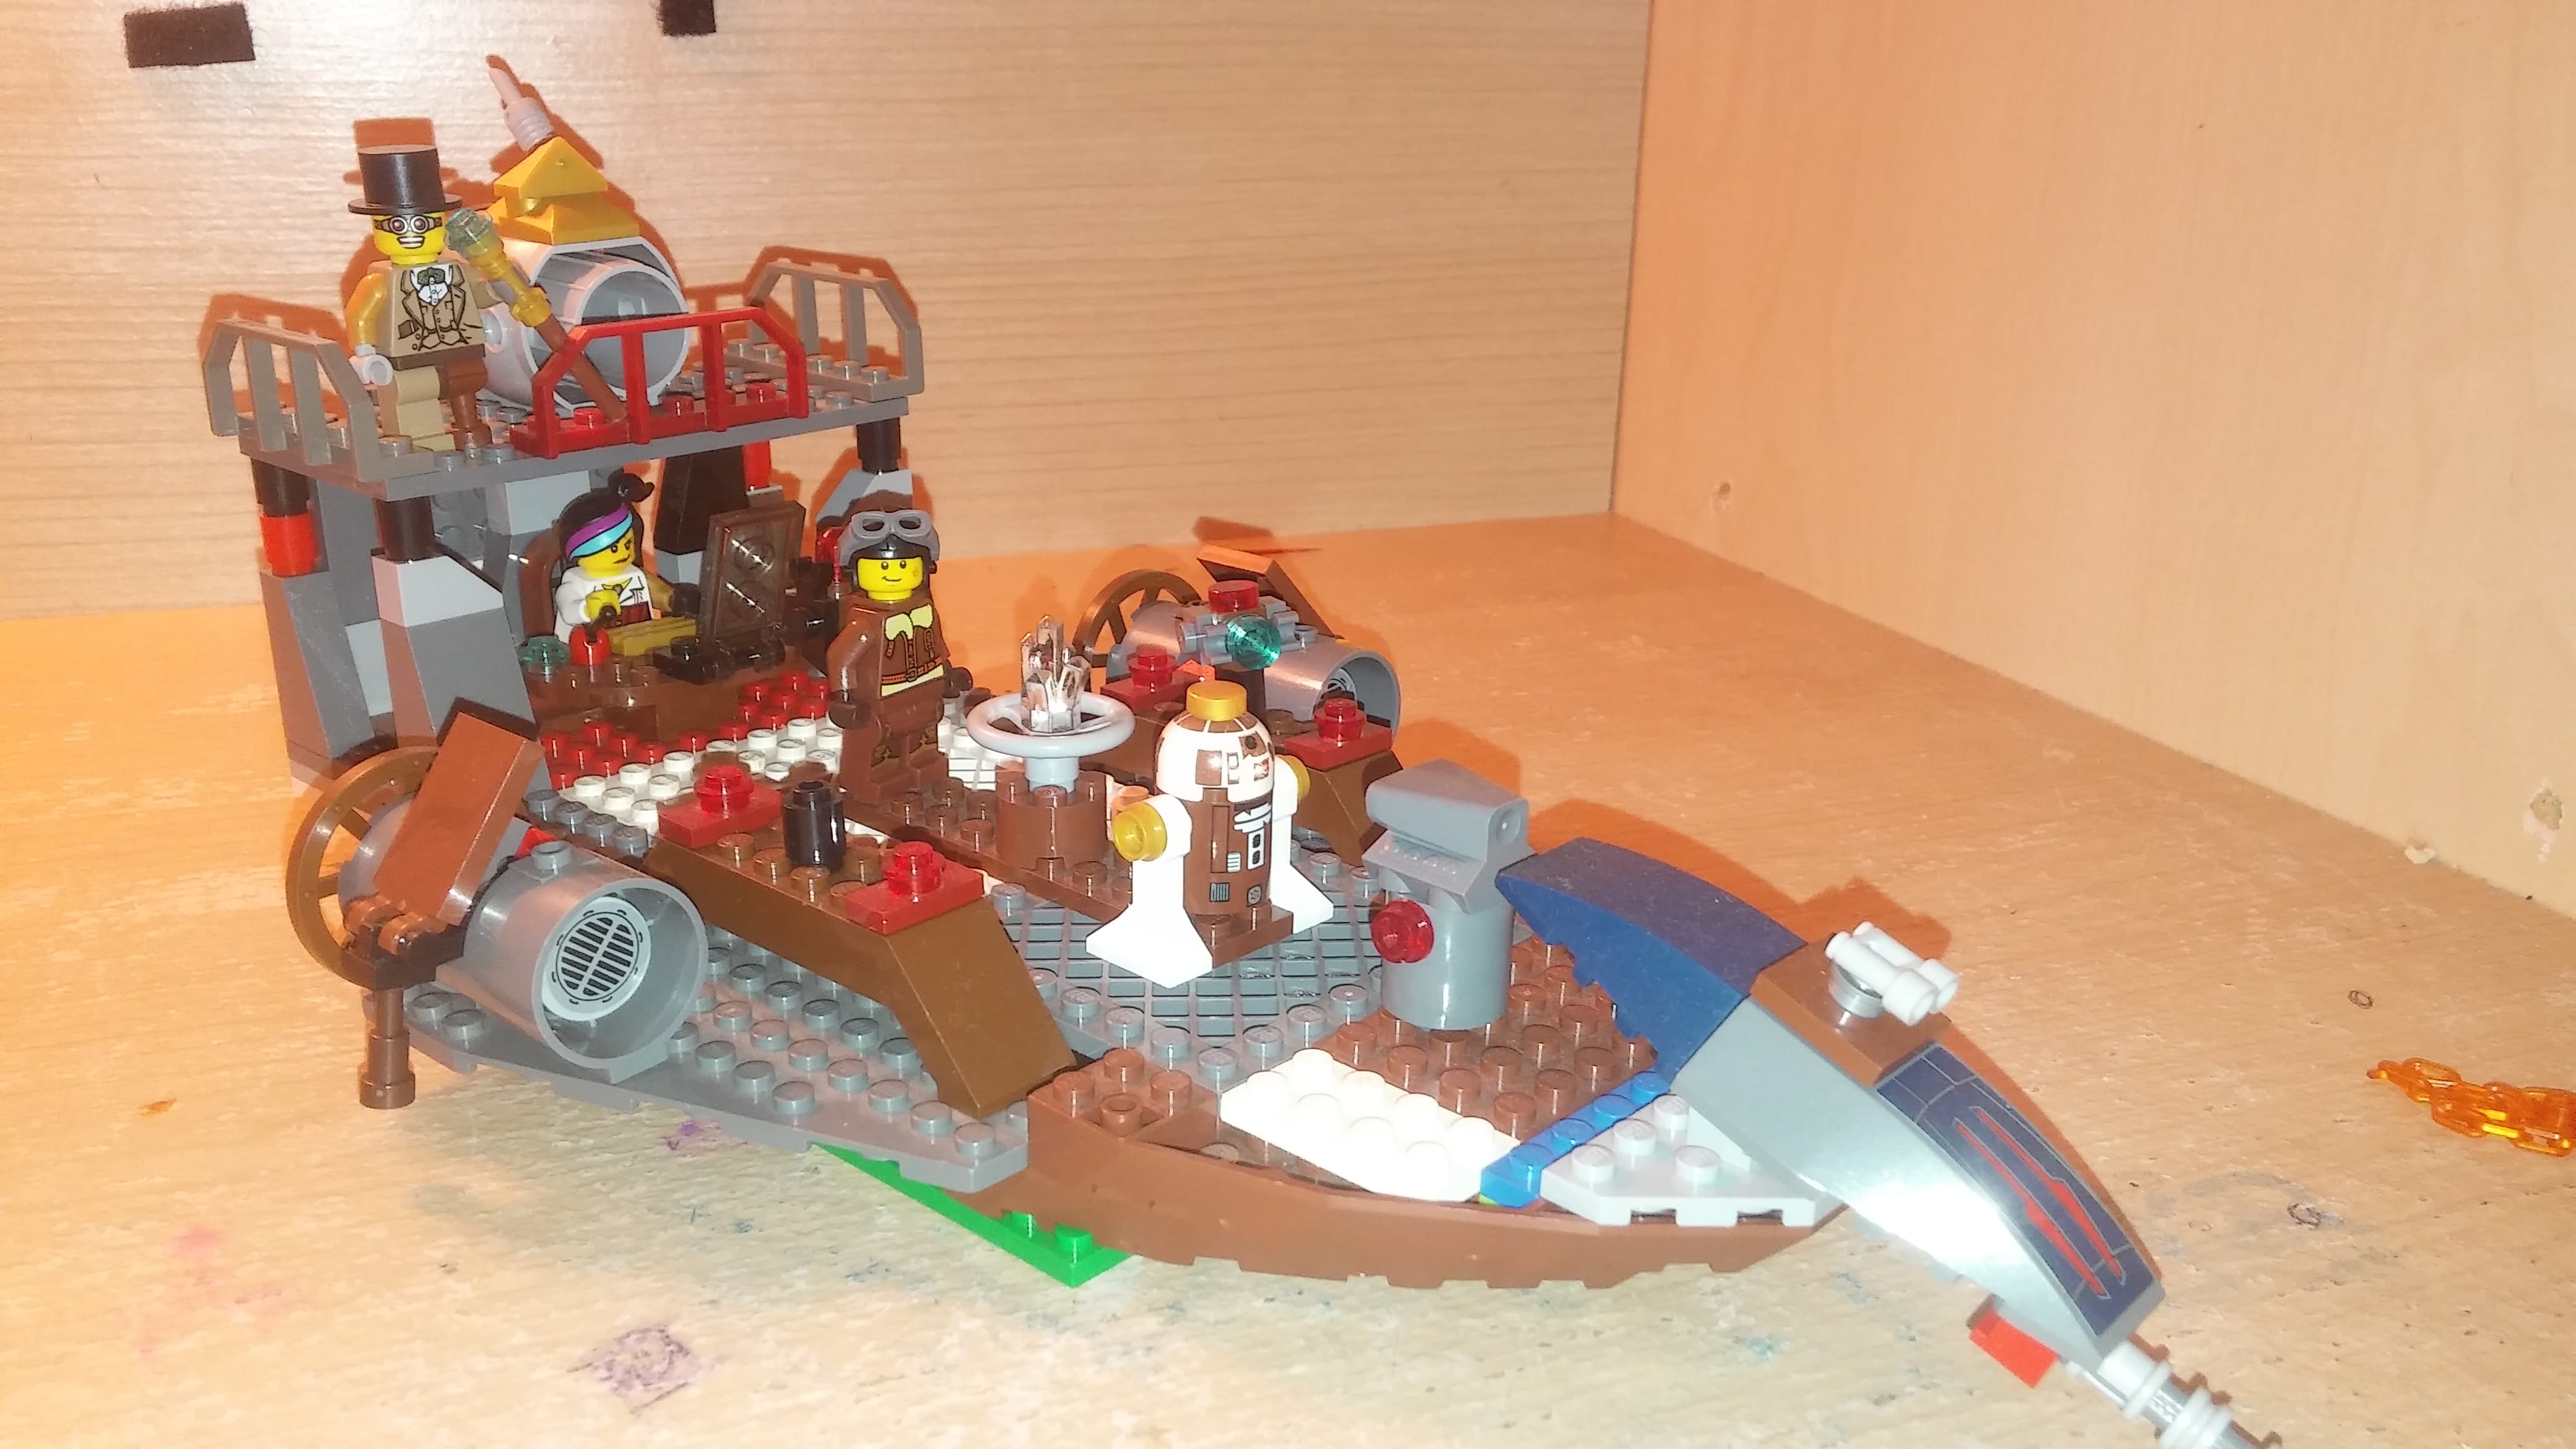 Lego Steampunk inspired ship.